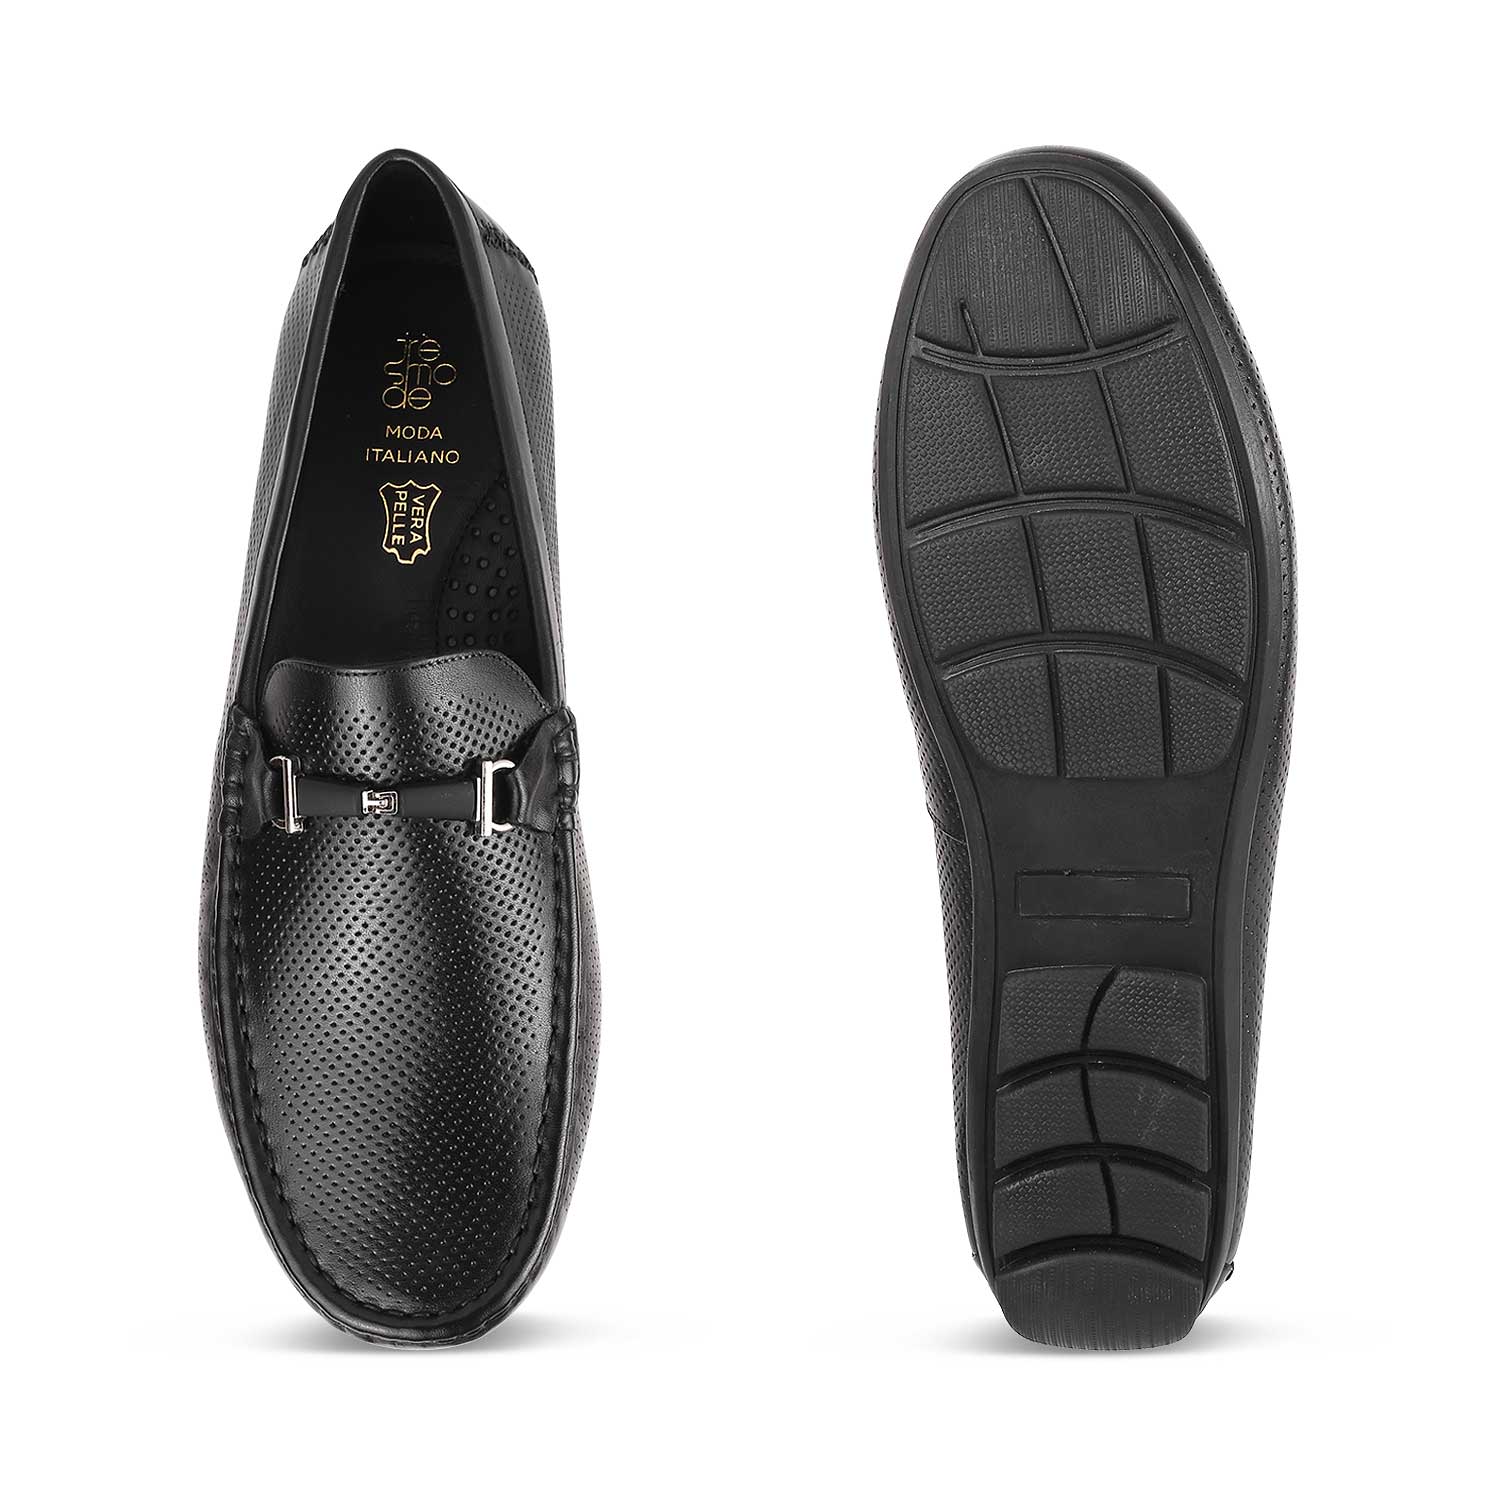 Open Black Men's Leather Loafers Online at Tresmode.com